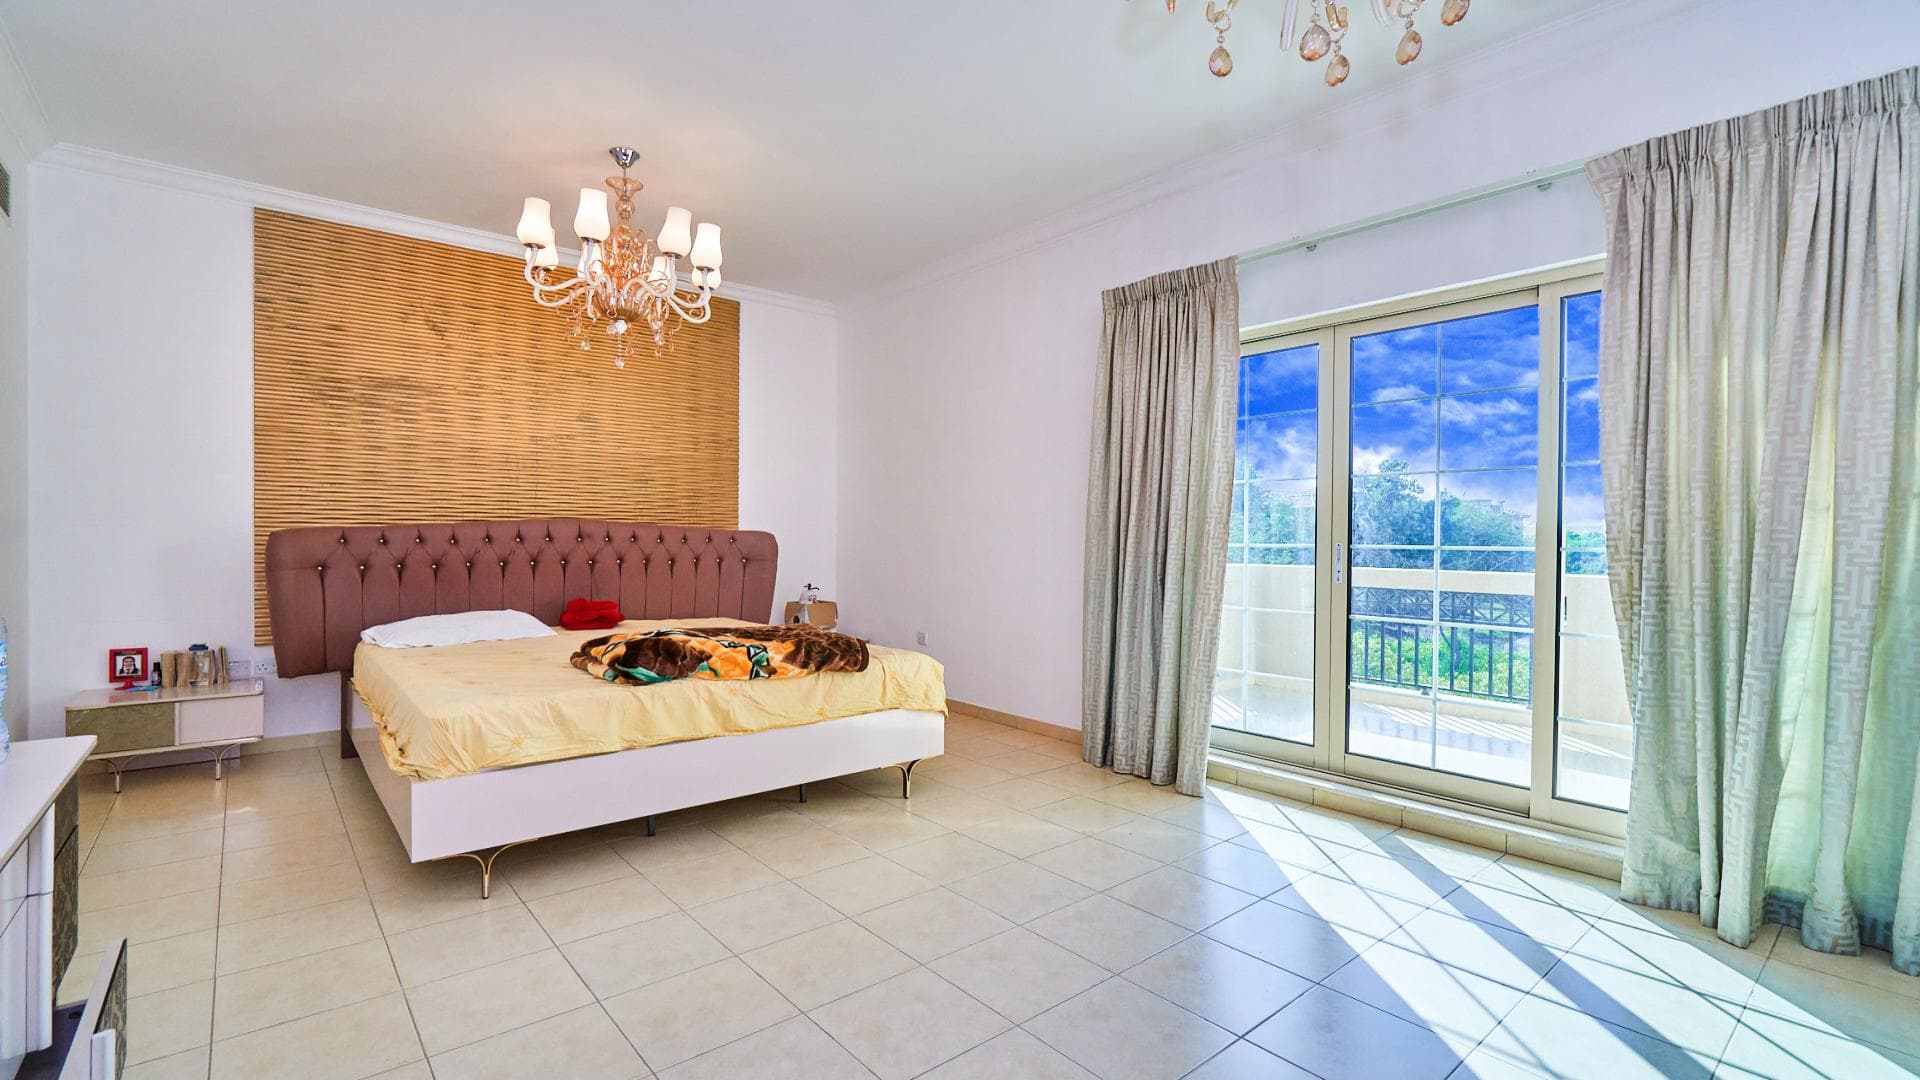 4 Bedroom Villa For Sale Oasis Clusters Lp18485 28757484d6c11000.jpg